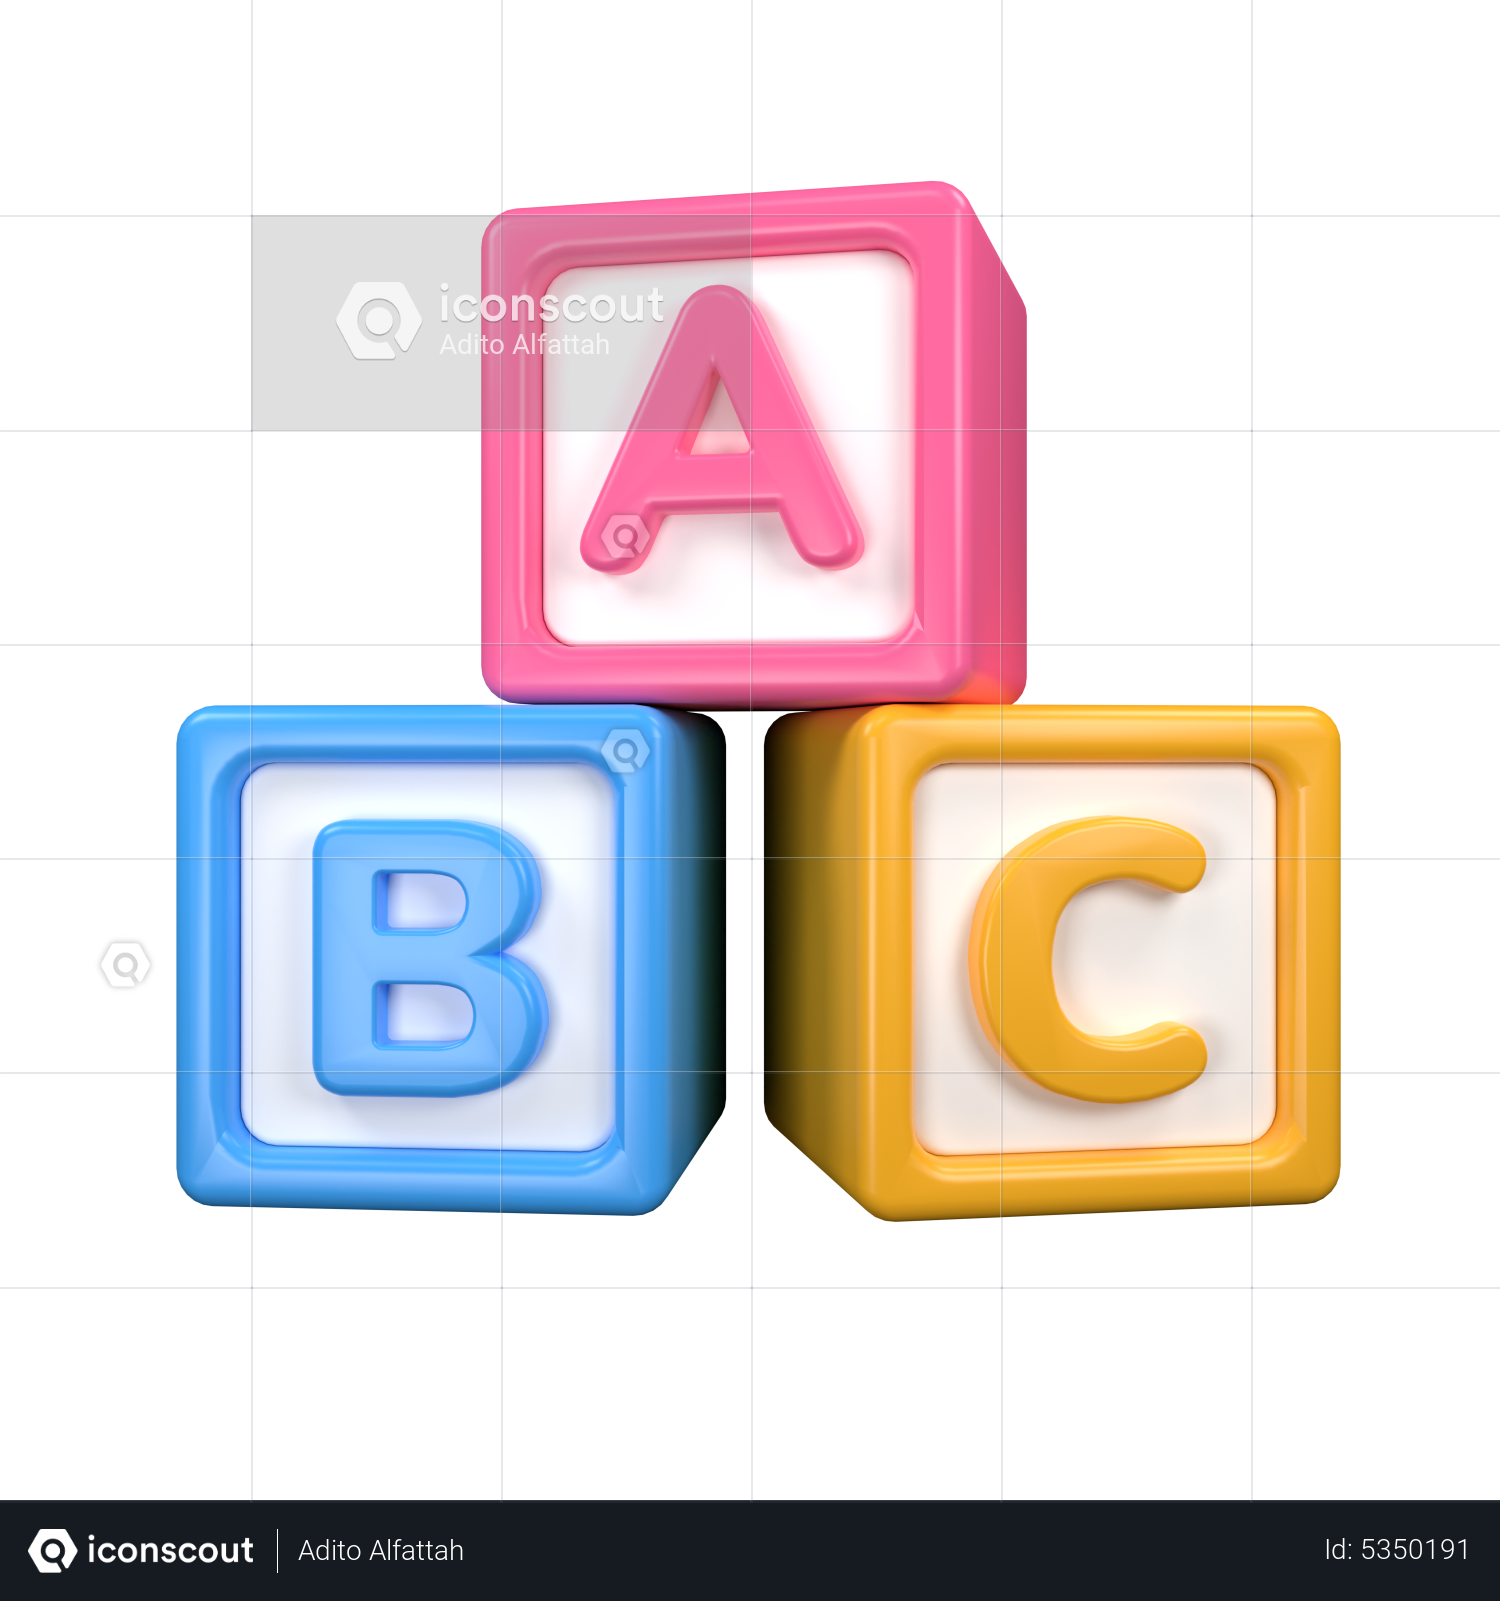 40 Large Jumbo ABC Blocks for Babies, Toddlers, Kids, Baby Shower